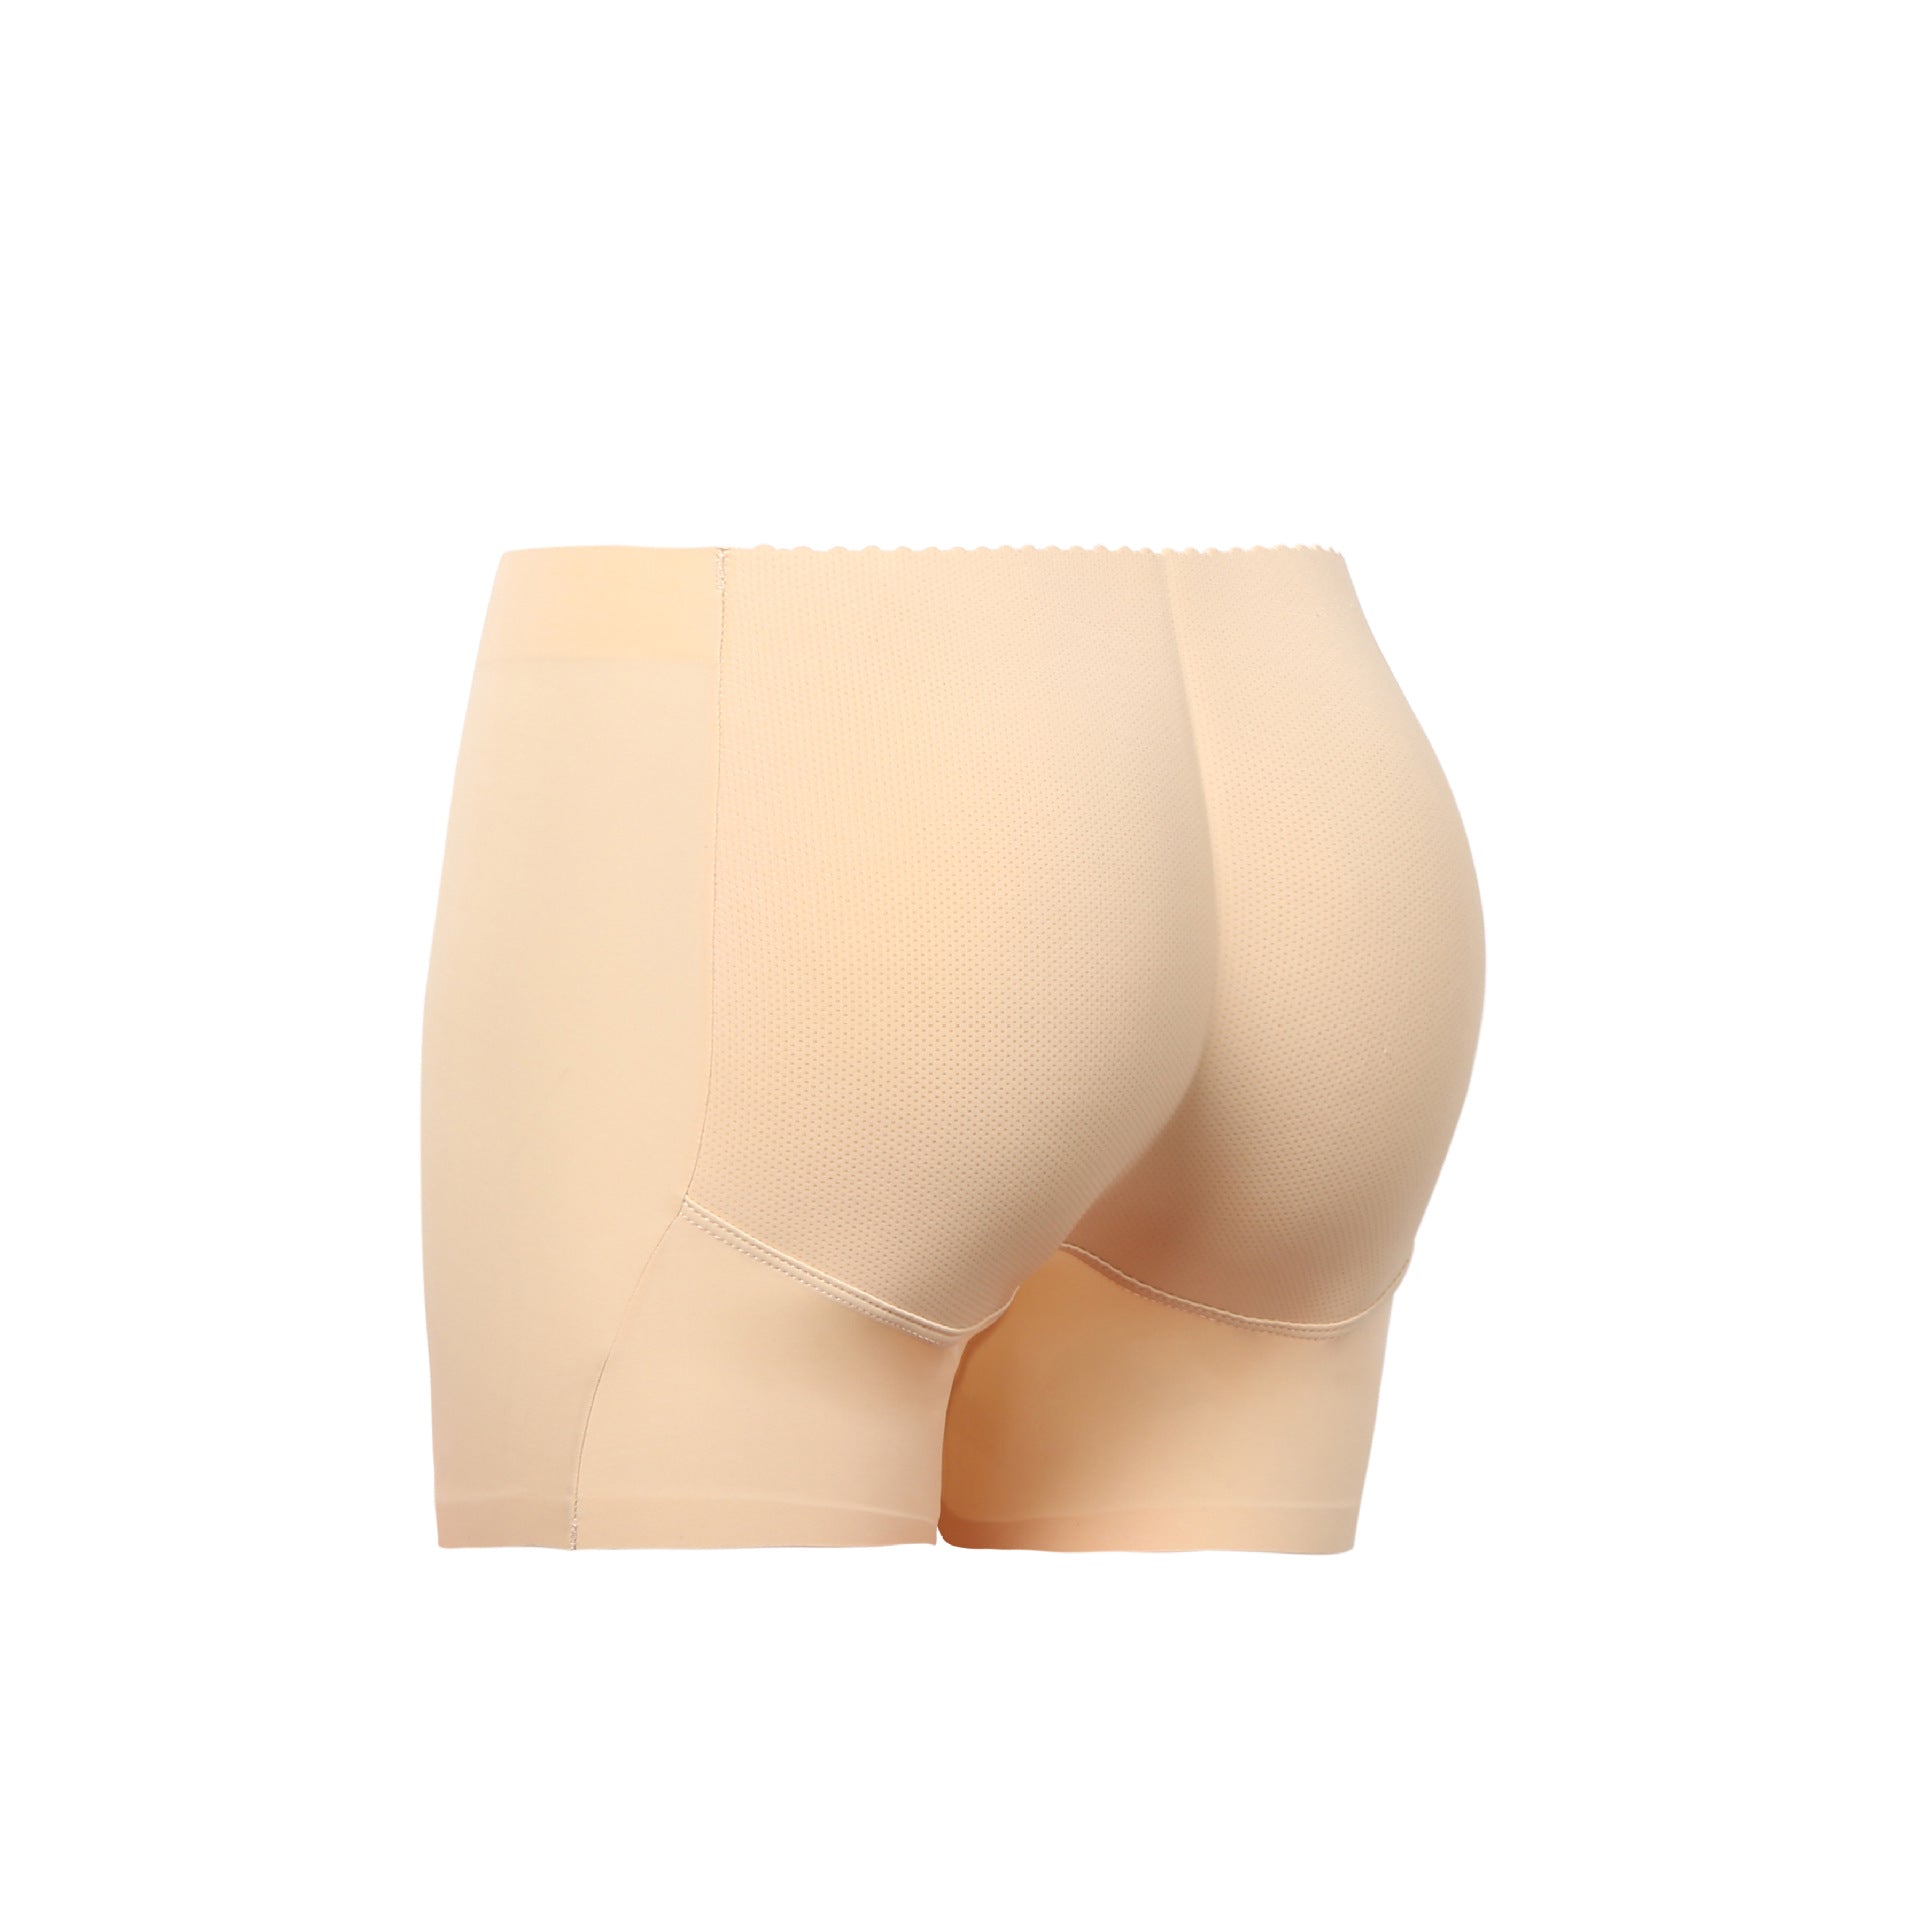 Mid-Waist Fixed Foam Hip Lift Bottom Flat Panty Shapewear Pantiess